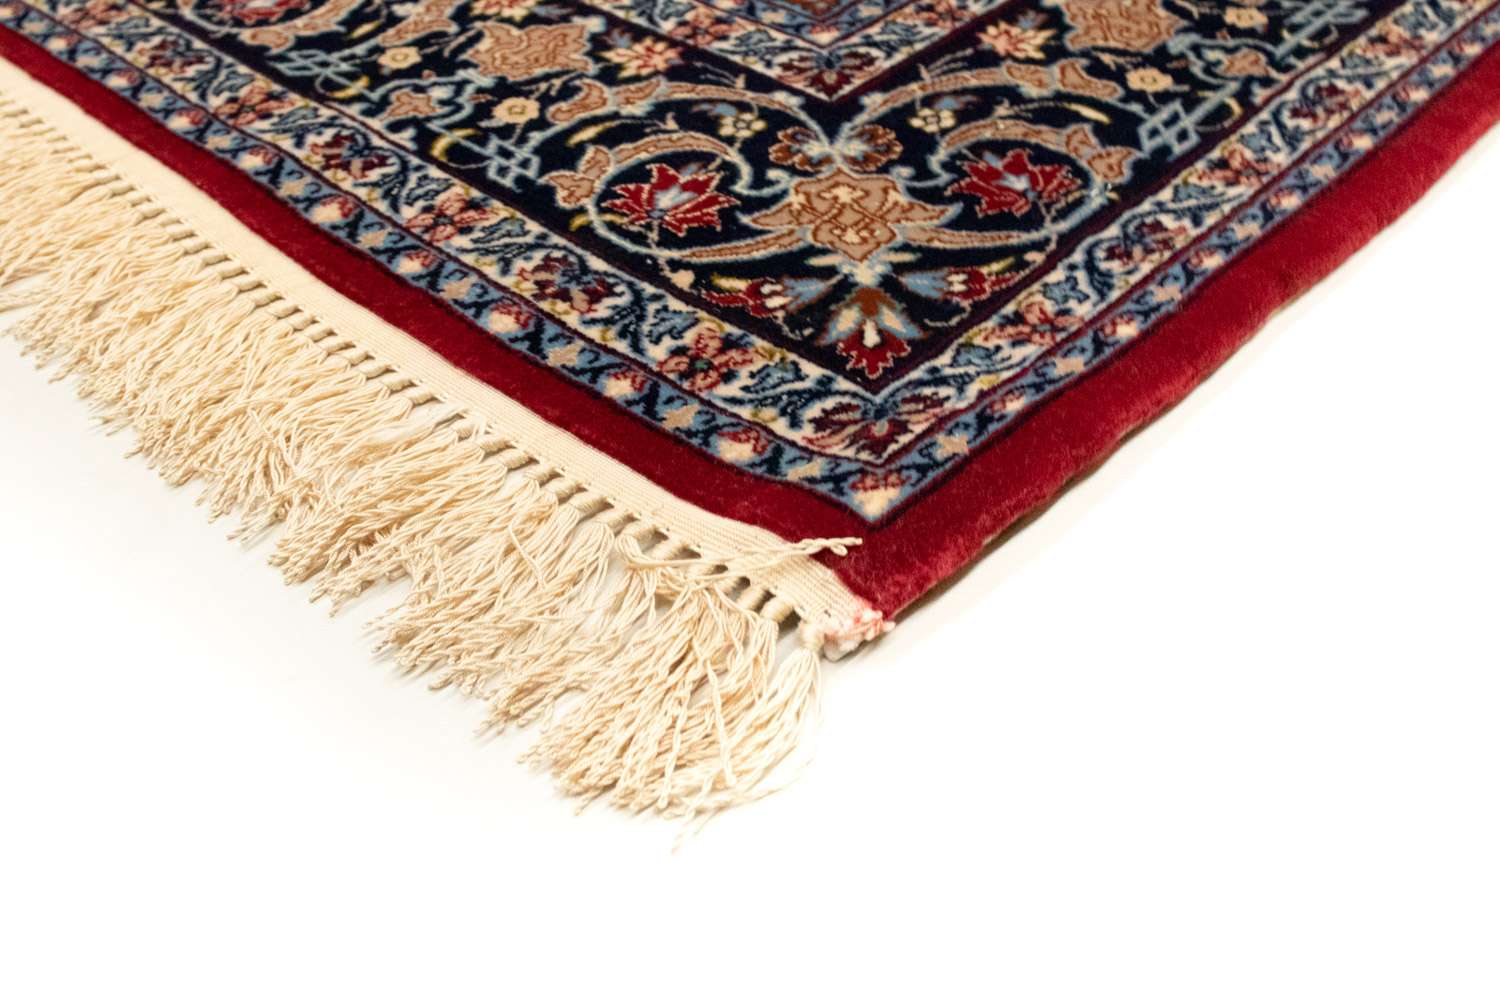 Perzisch tapijt - Isfahan - Premium - 169 x 112 cm - rood